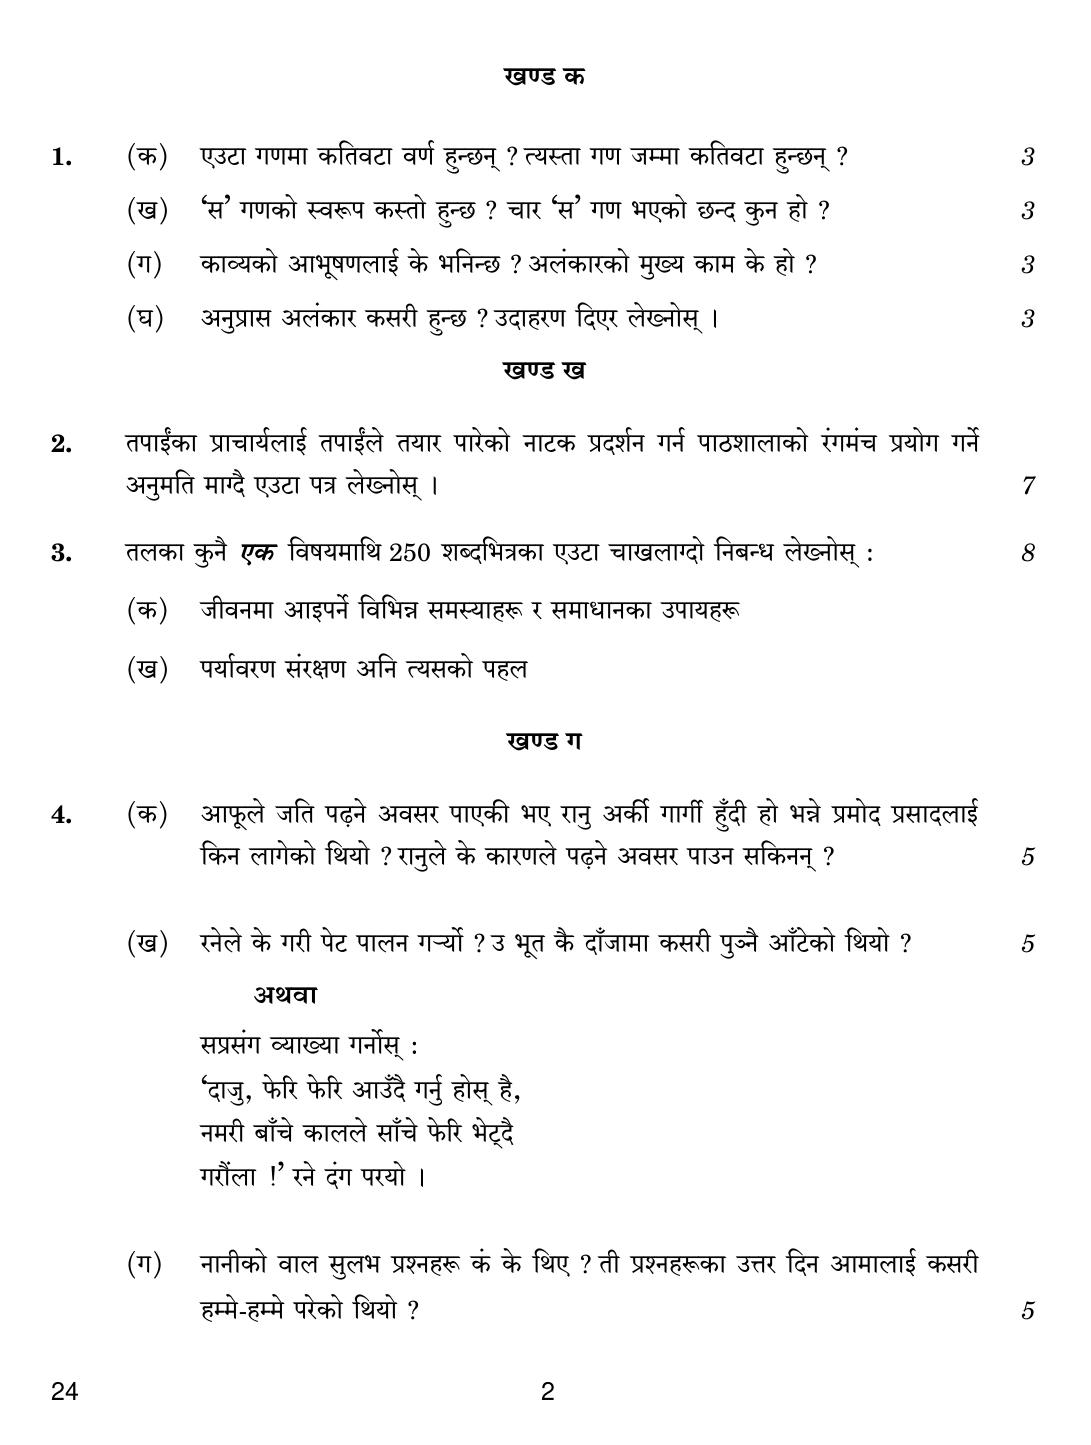 CBSE Class 12 24 Nepali 2019 Question Paper - Page 2